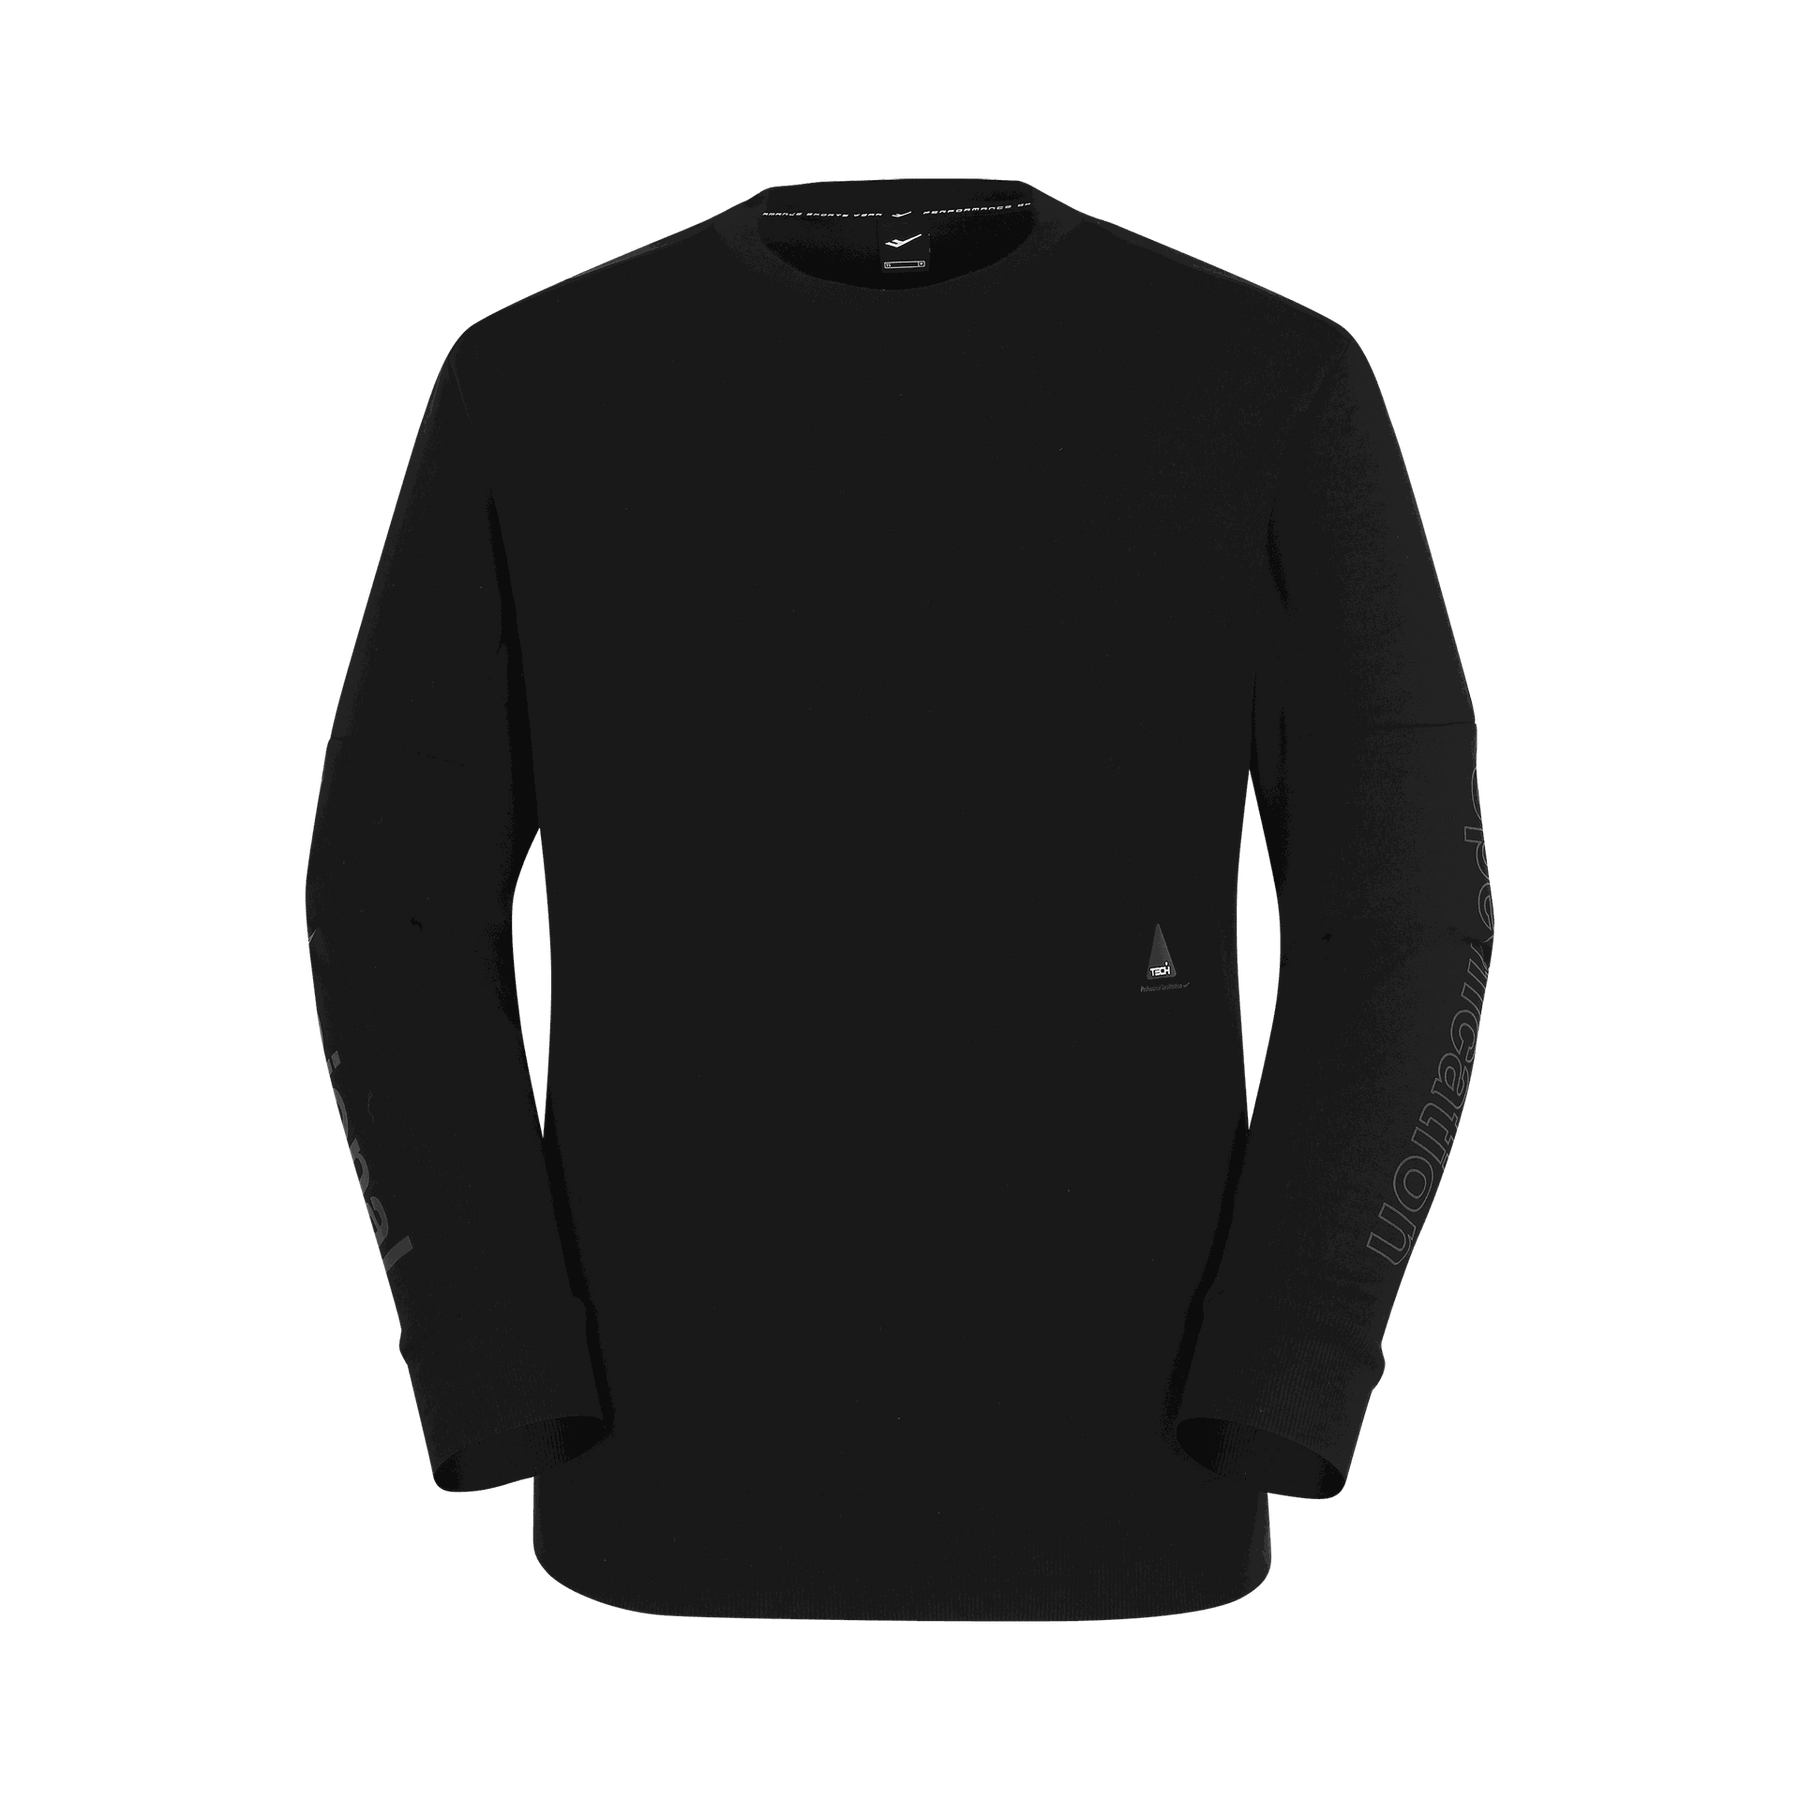 Áo thể thao PROSPECS Nam TM-Comfort Sweatshirt MT-S152